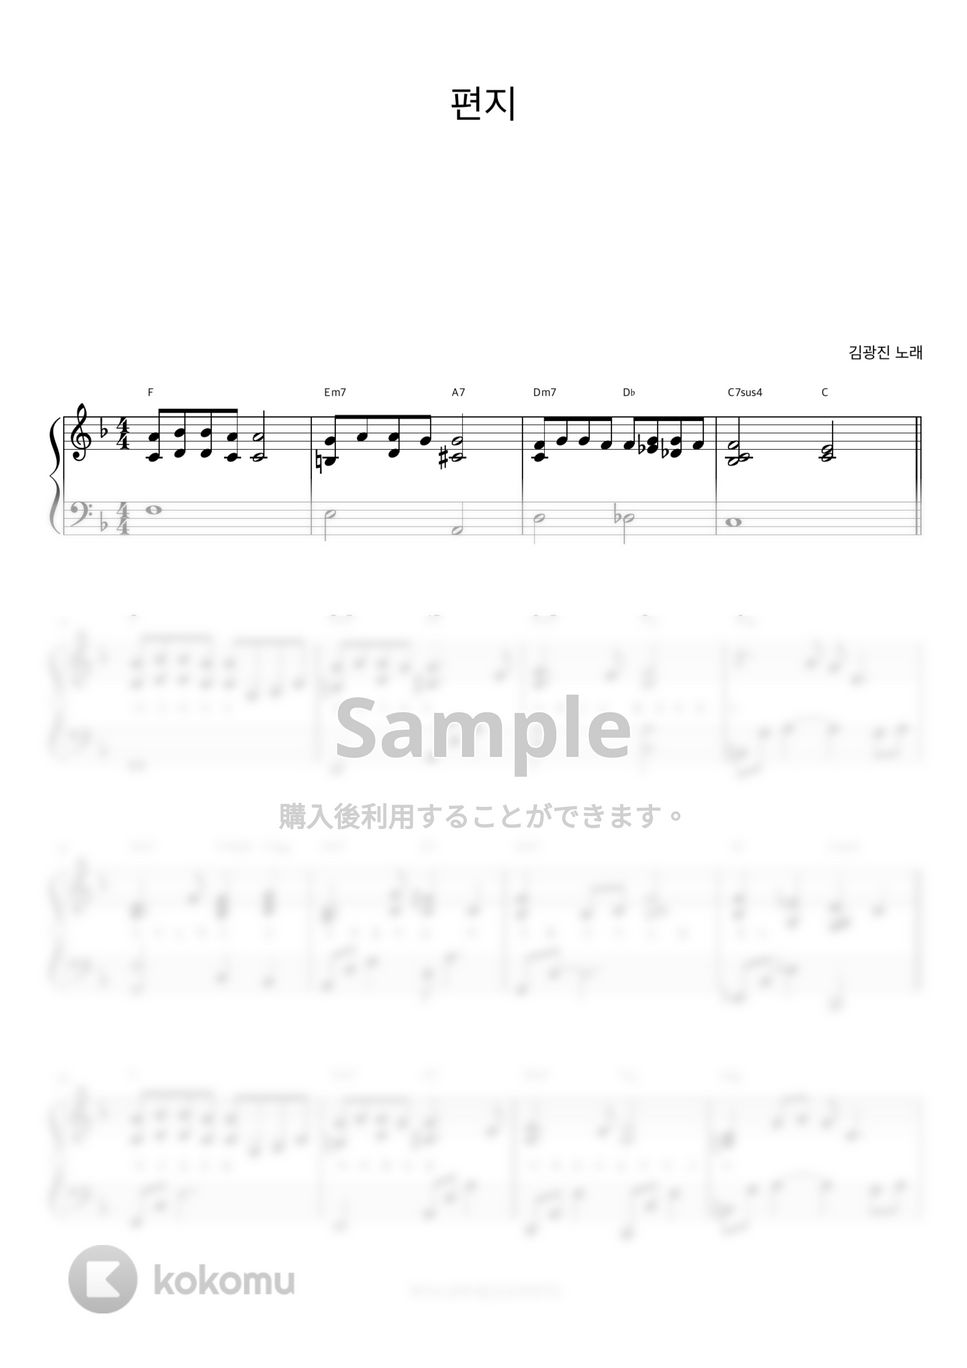 kim Kwang Jin - The Letter (伴奏楽譜) by 피아노정류장